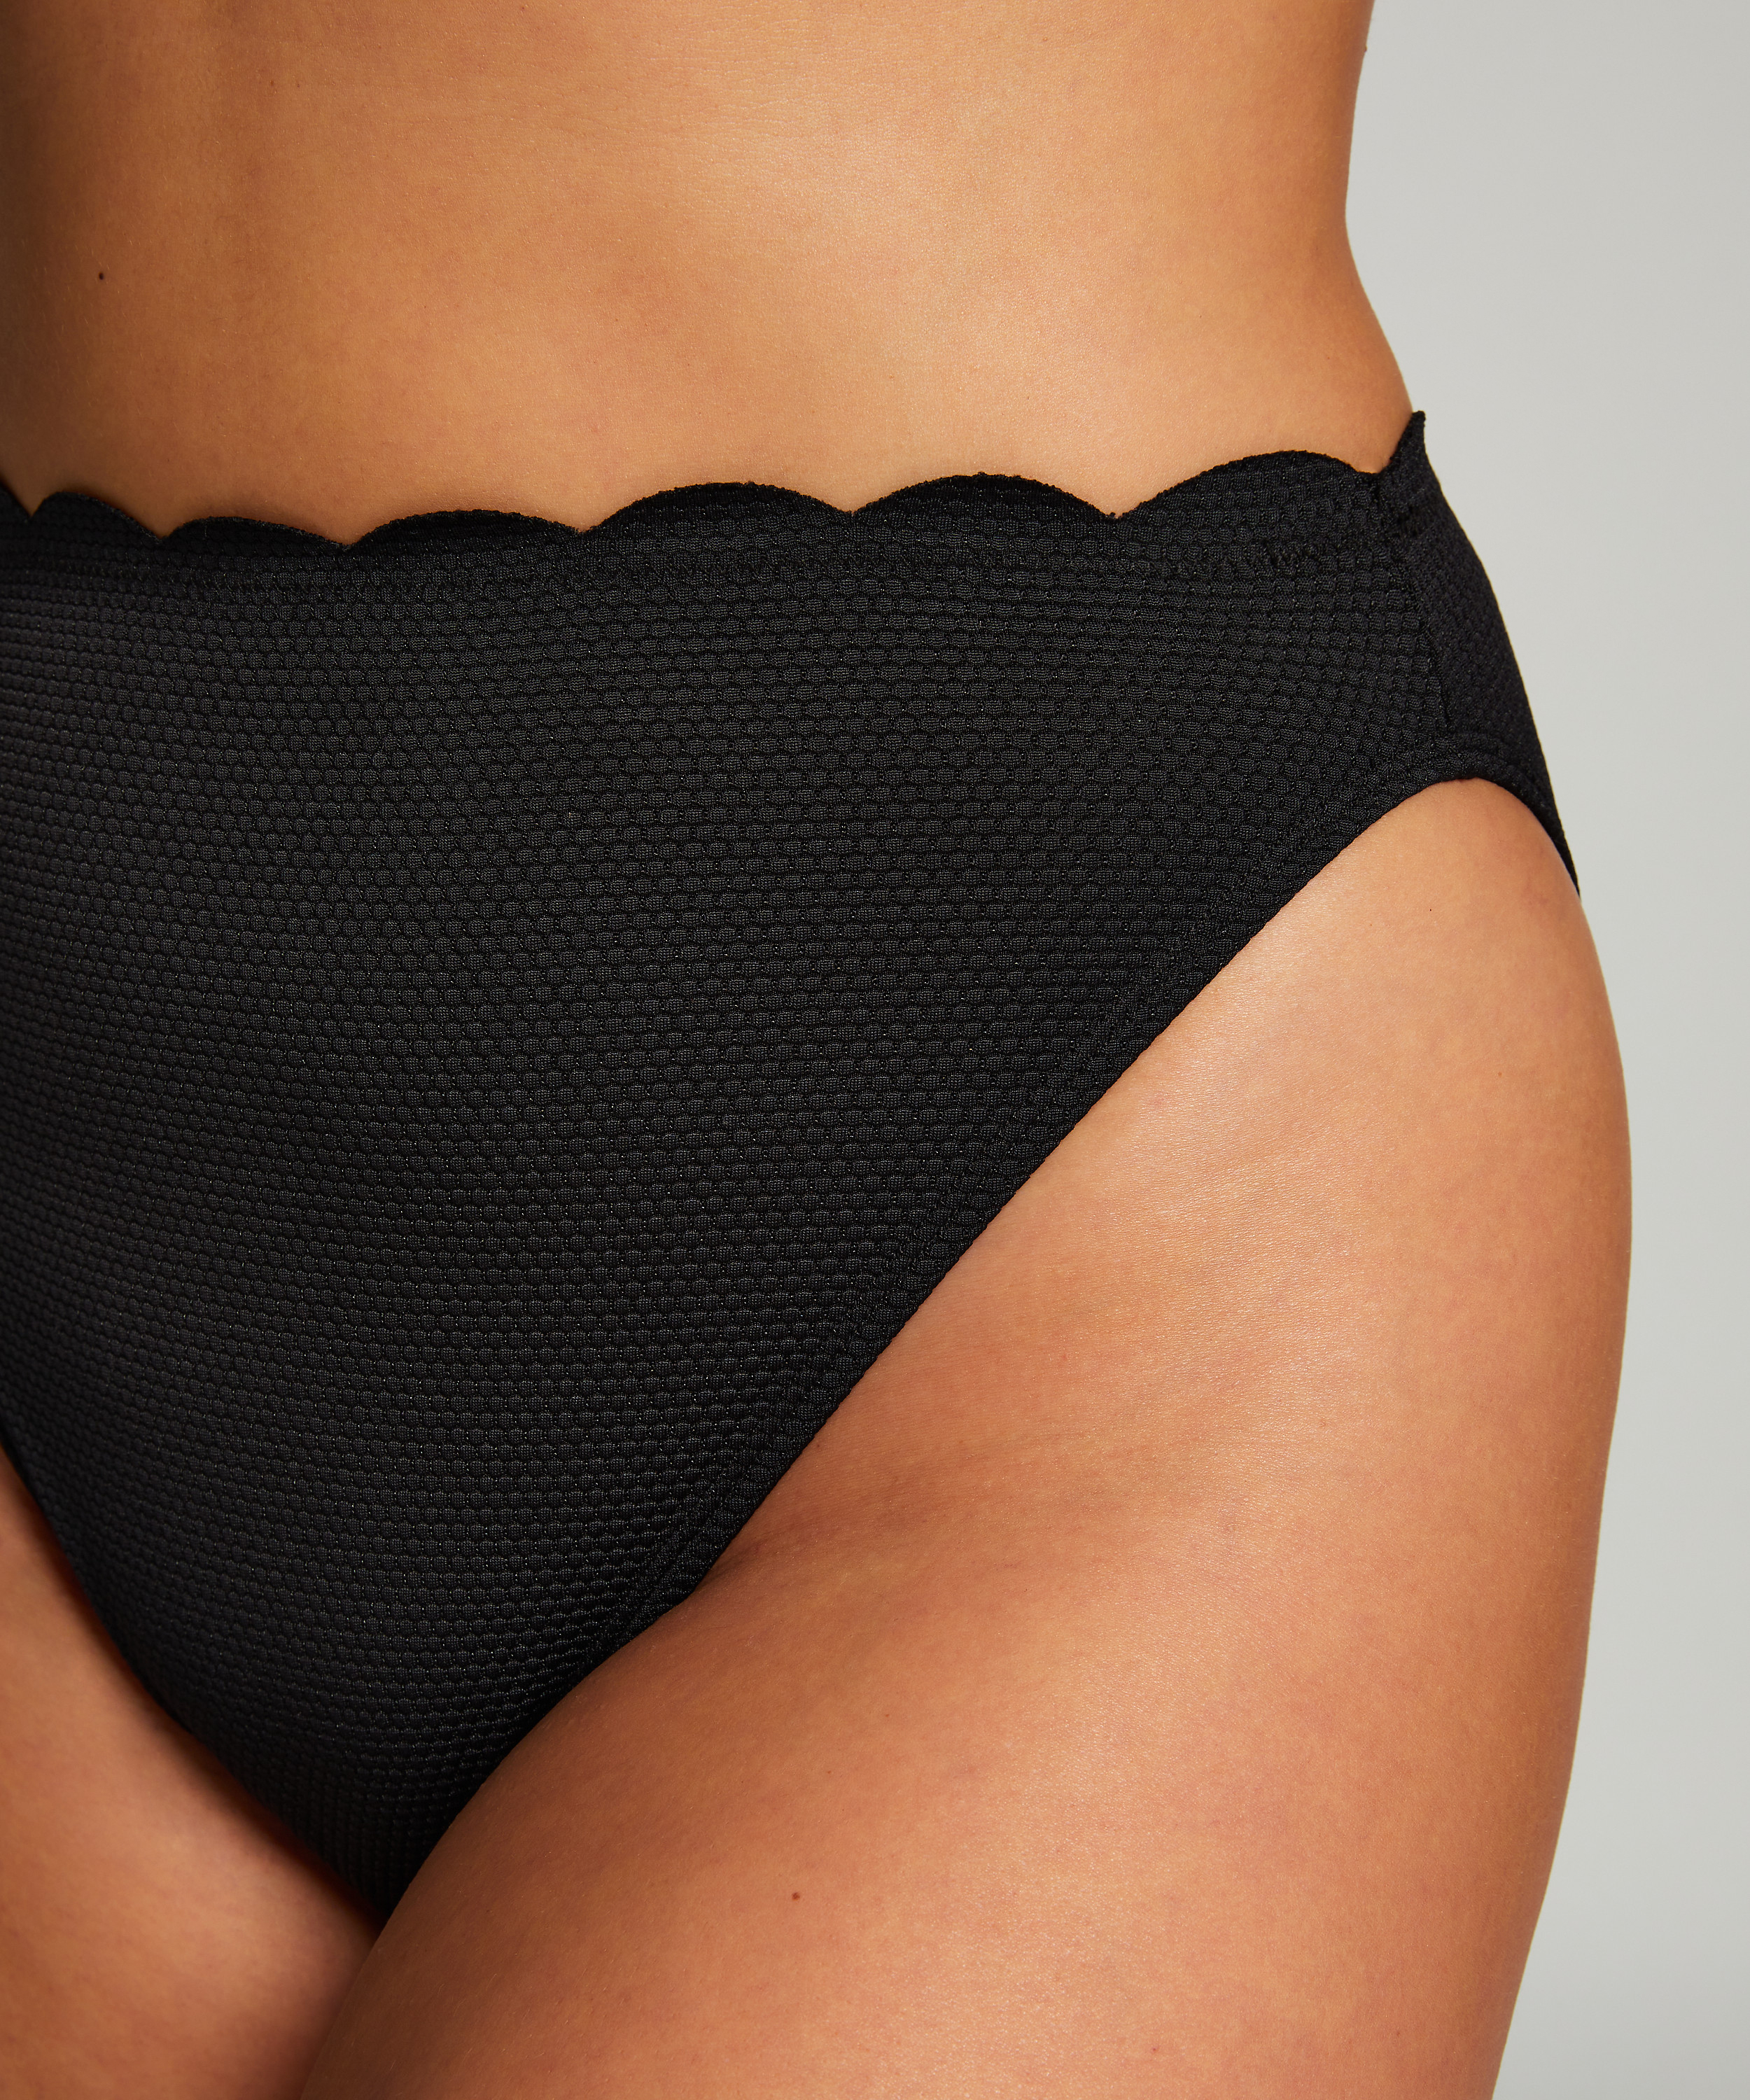 High-cut Scallop bikini bottoms for €18.99 - New Arrivals - Hunkemöller